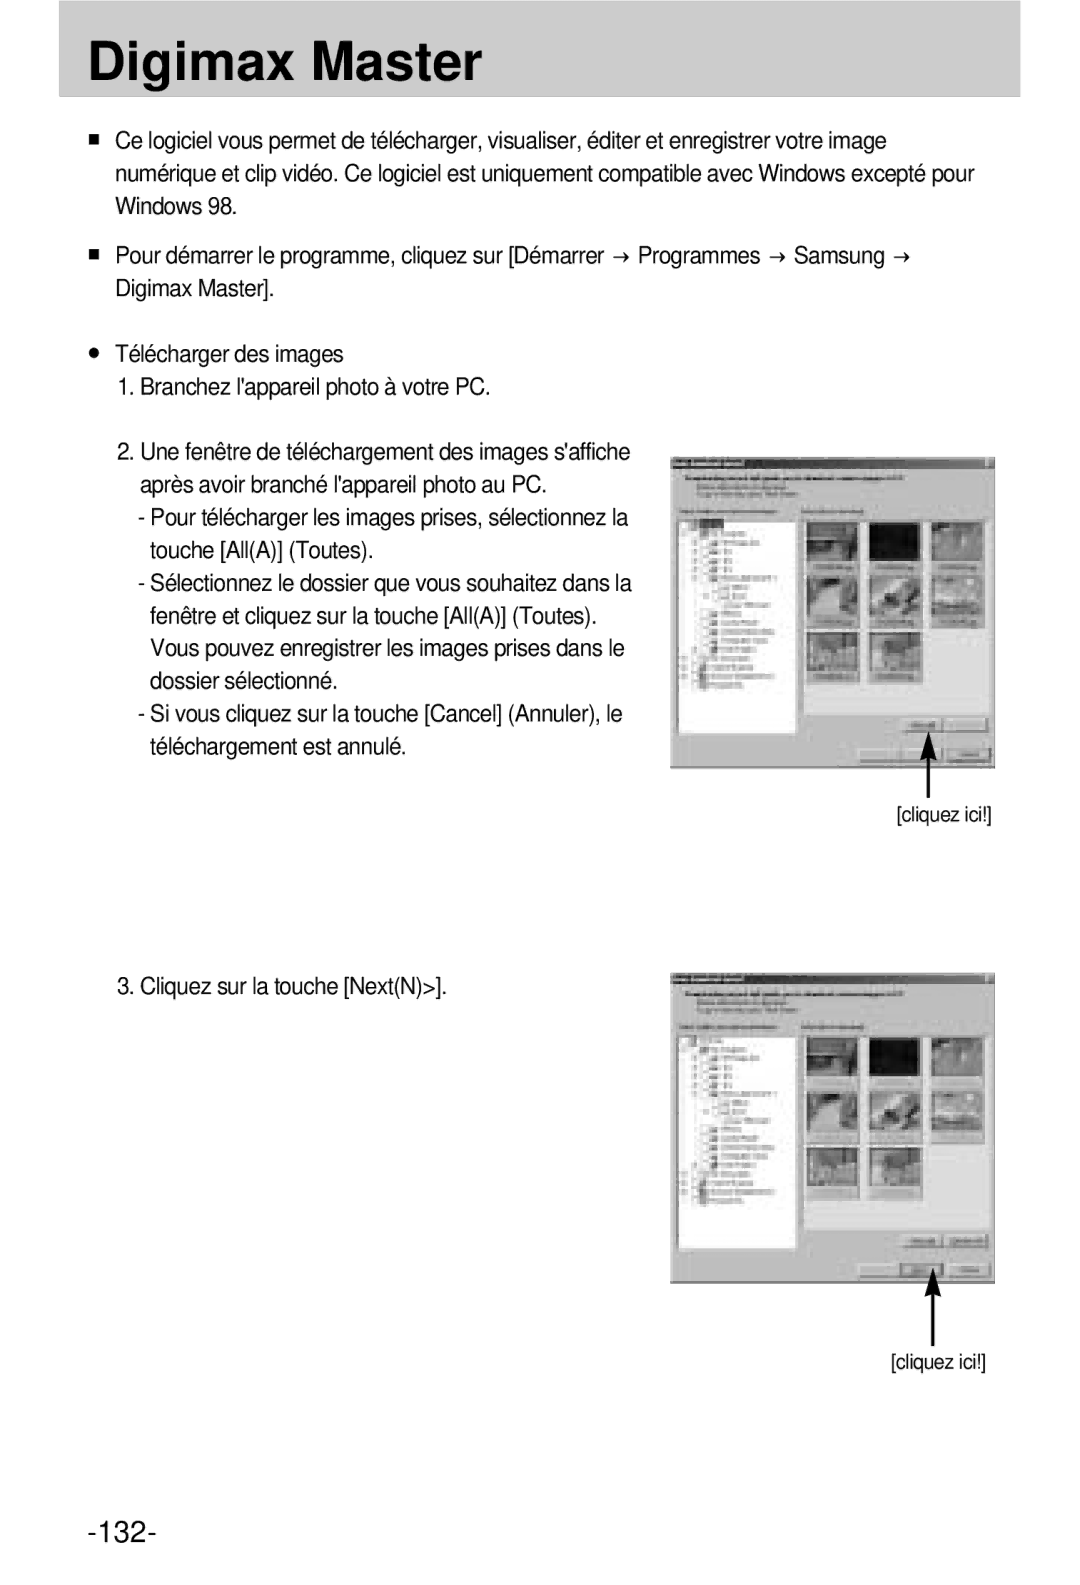 Samsung EC-V800ZSBA/FR manual Digimax Master, Cliquez sur la touche NextN 